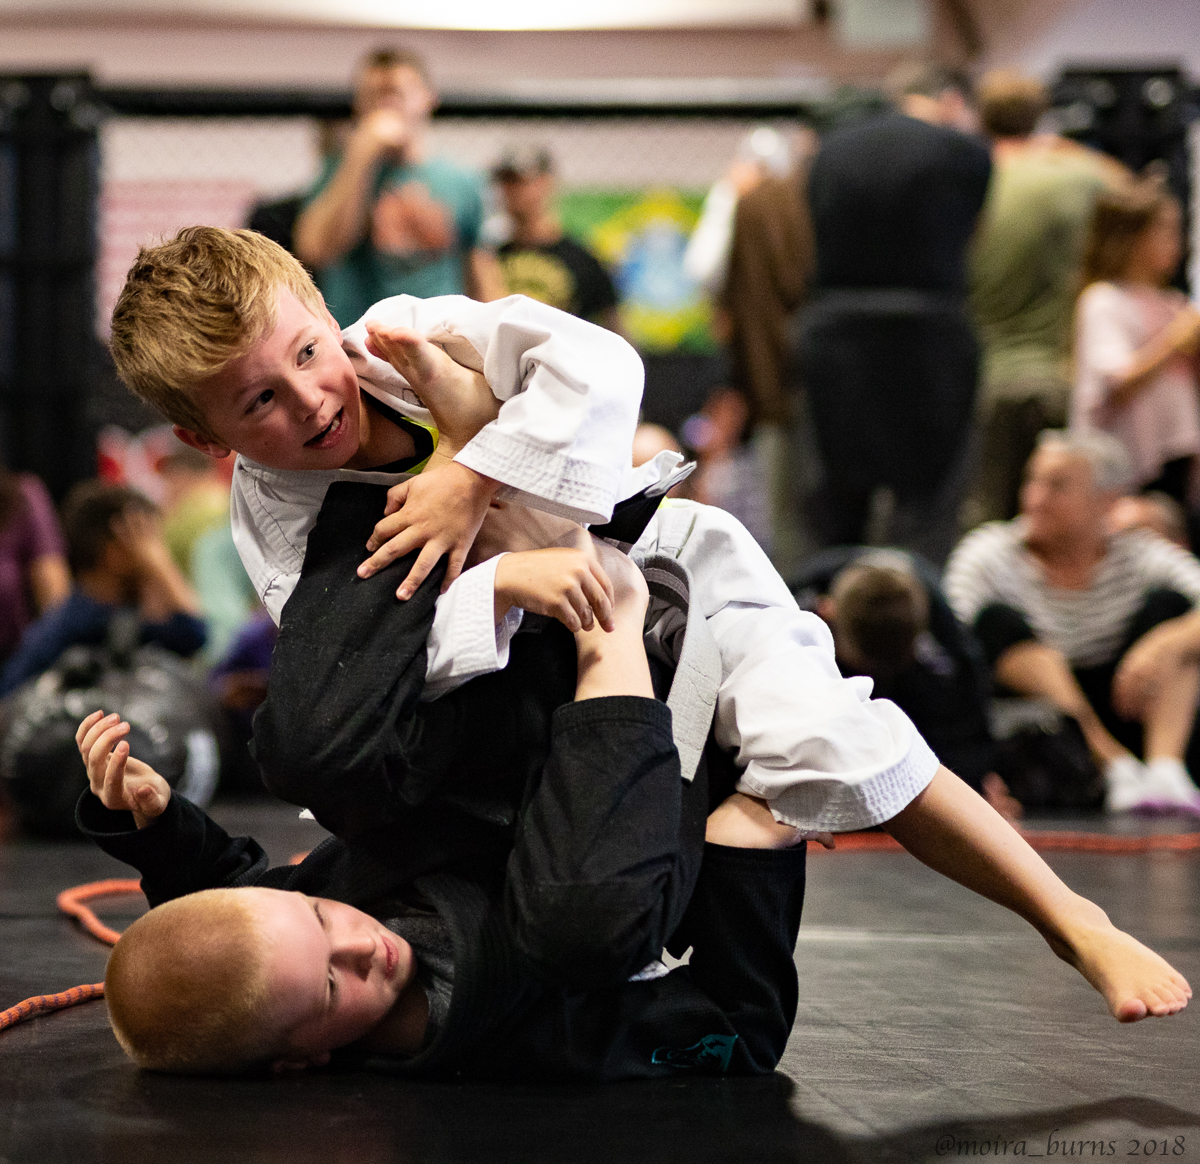 Two boys doing Jiu Jitsu at Easton Summer Camp